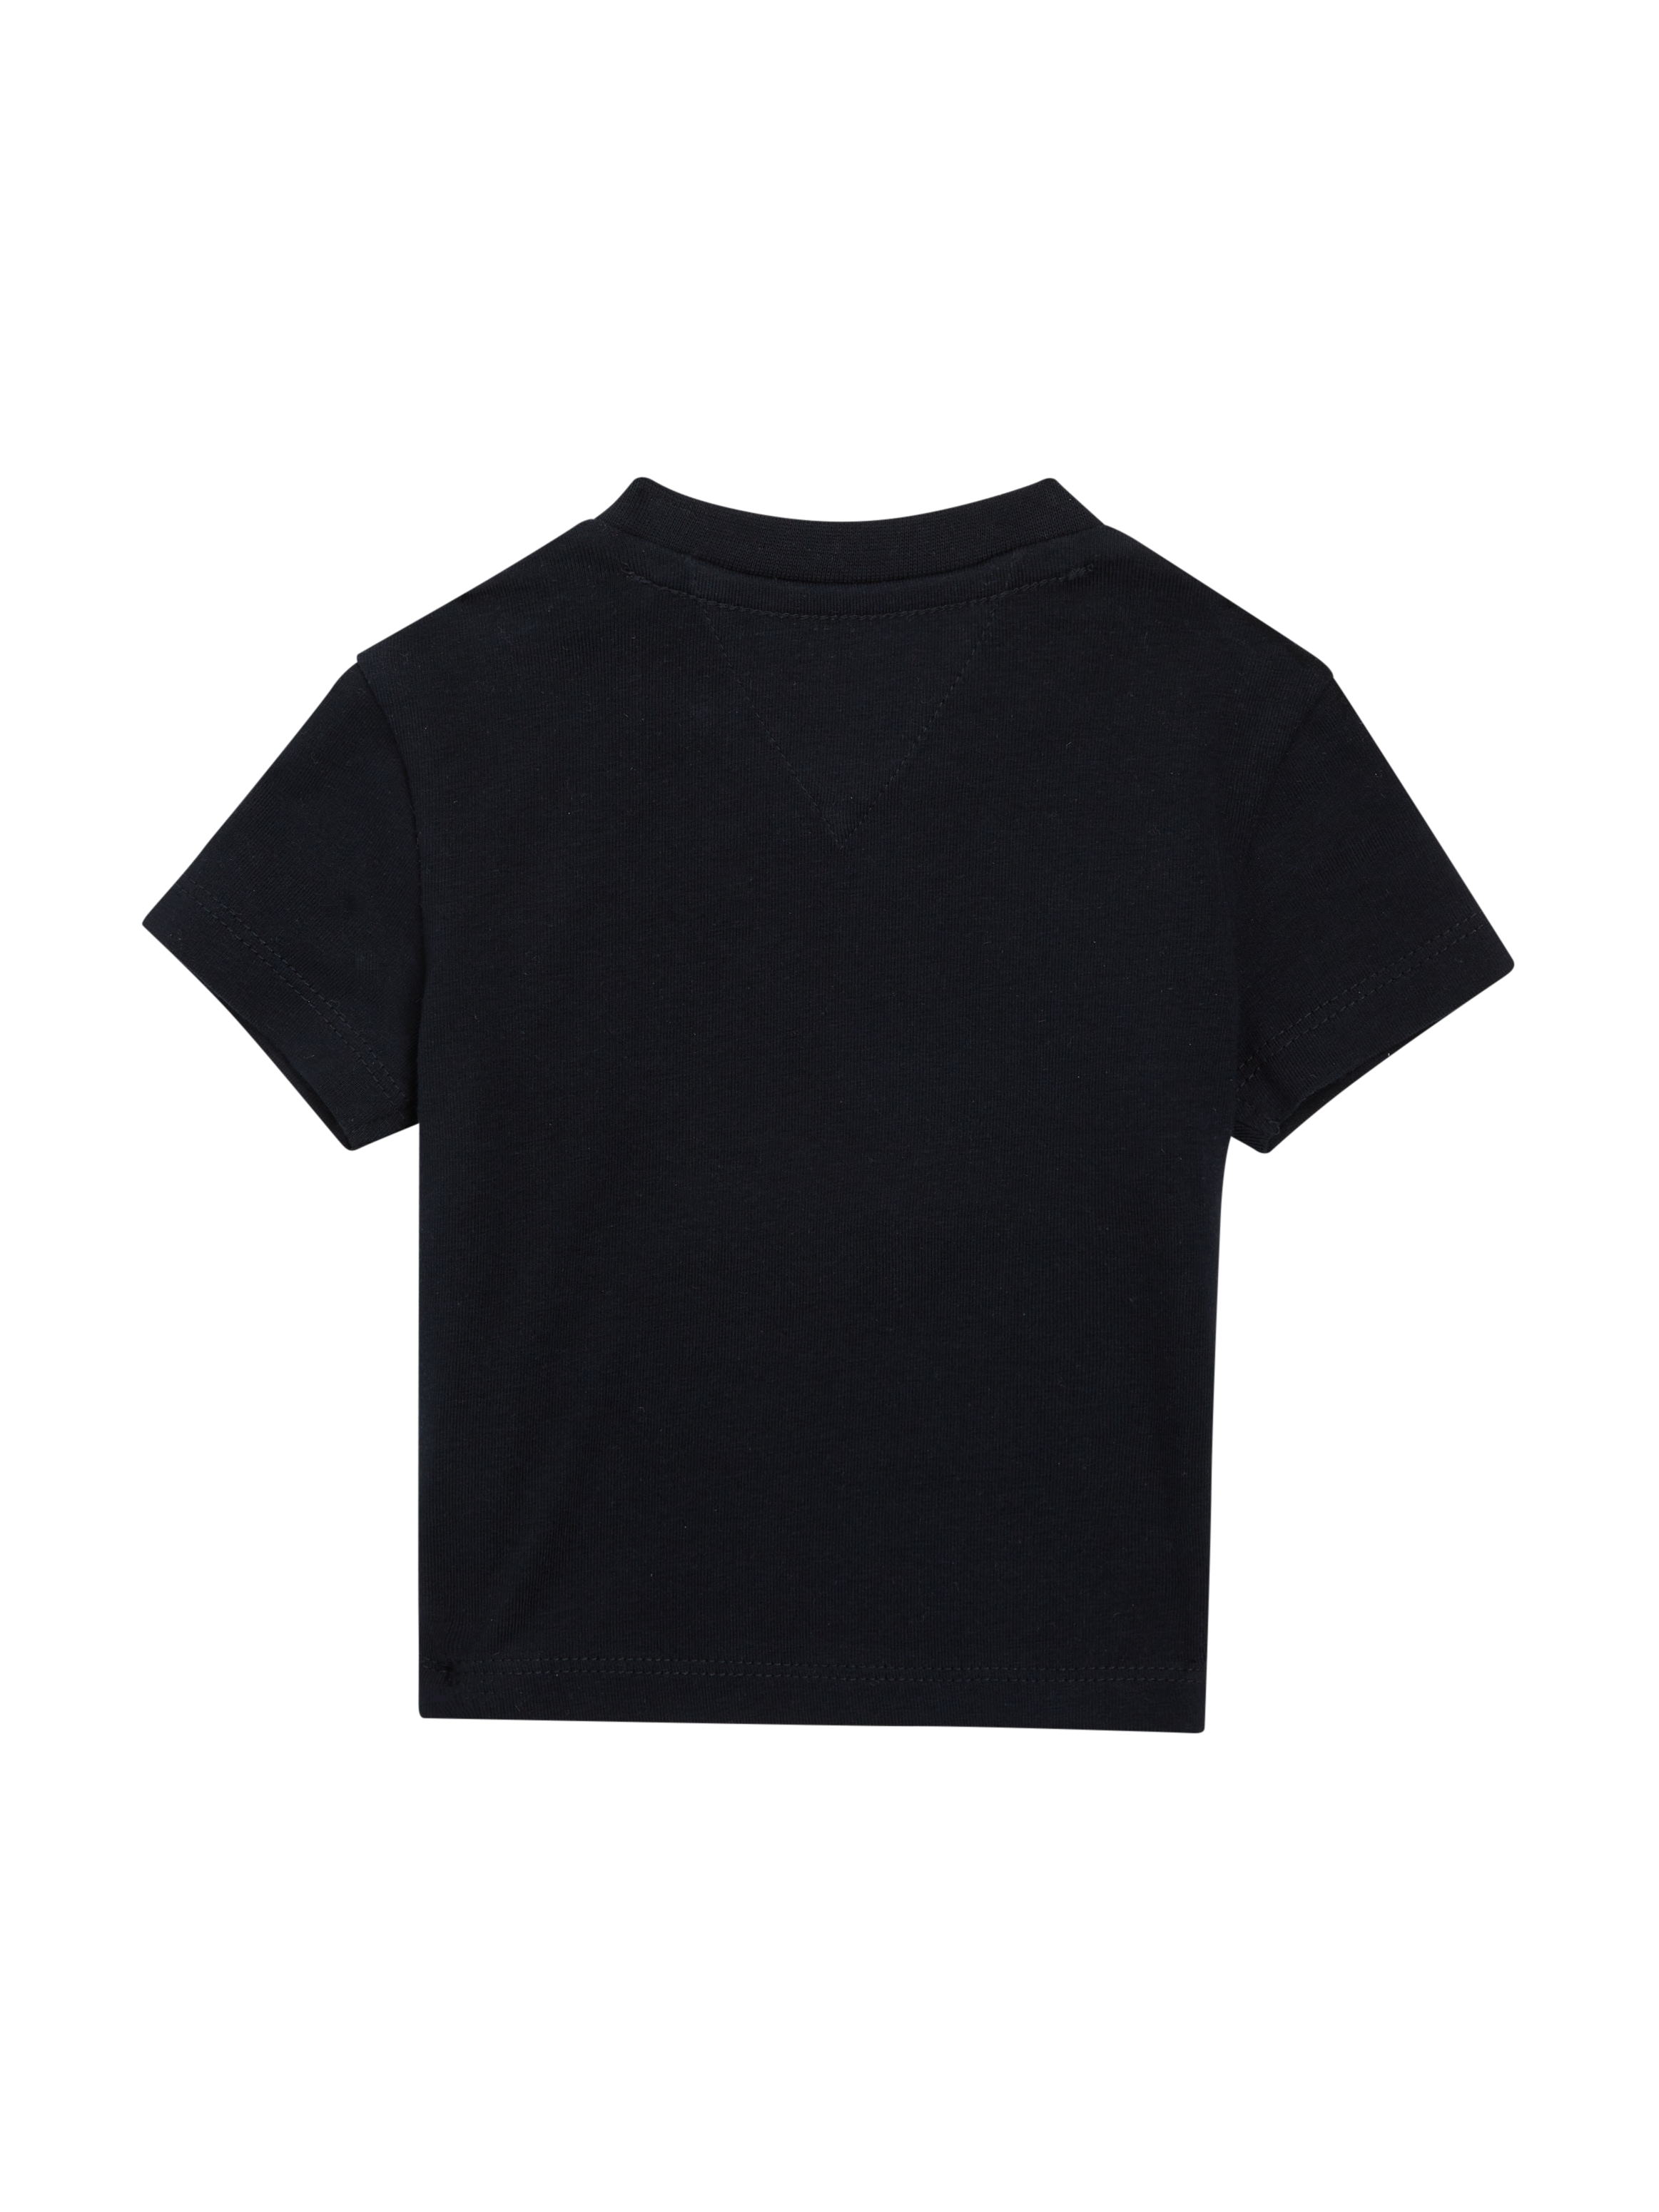 Tommy Hilfiger T-Shirt »BABY CURVED MONOTYPE TEE S/S«, mit großem Hilfiger Front Print & Logo-Flag